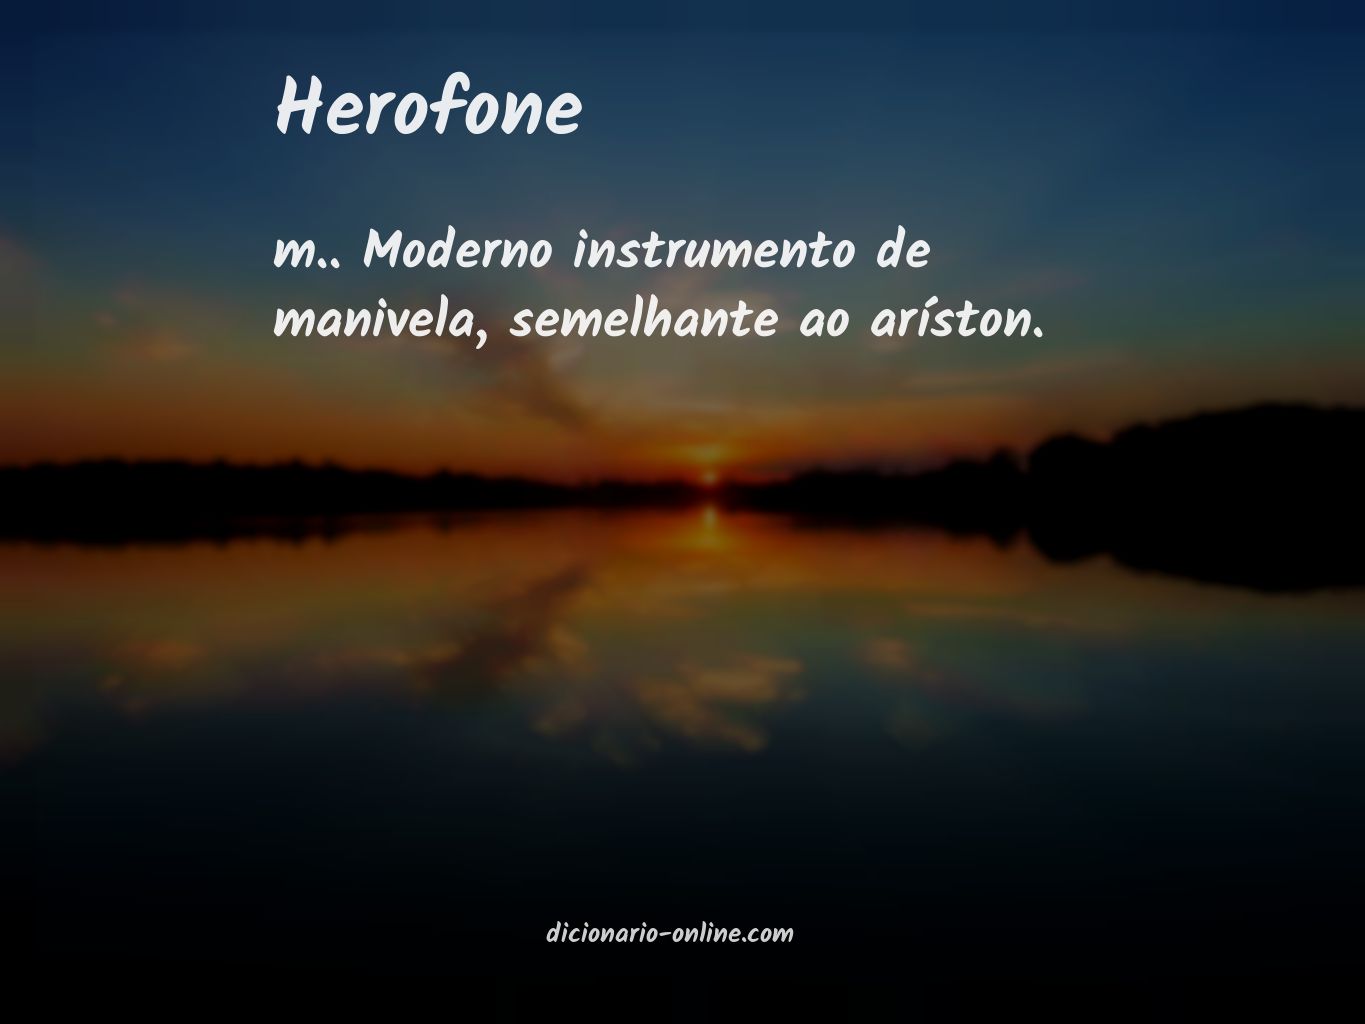 Significado de herofone